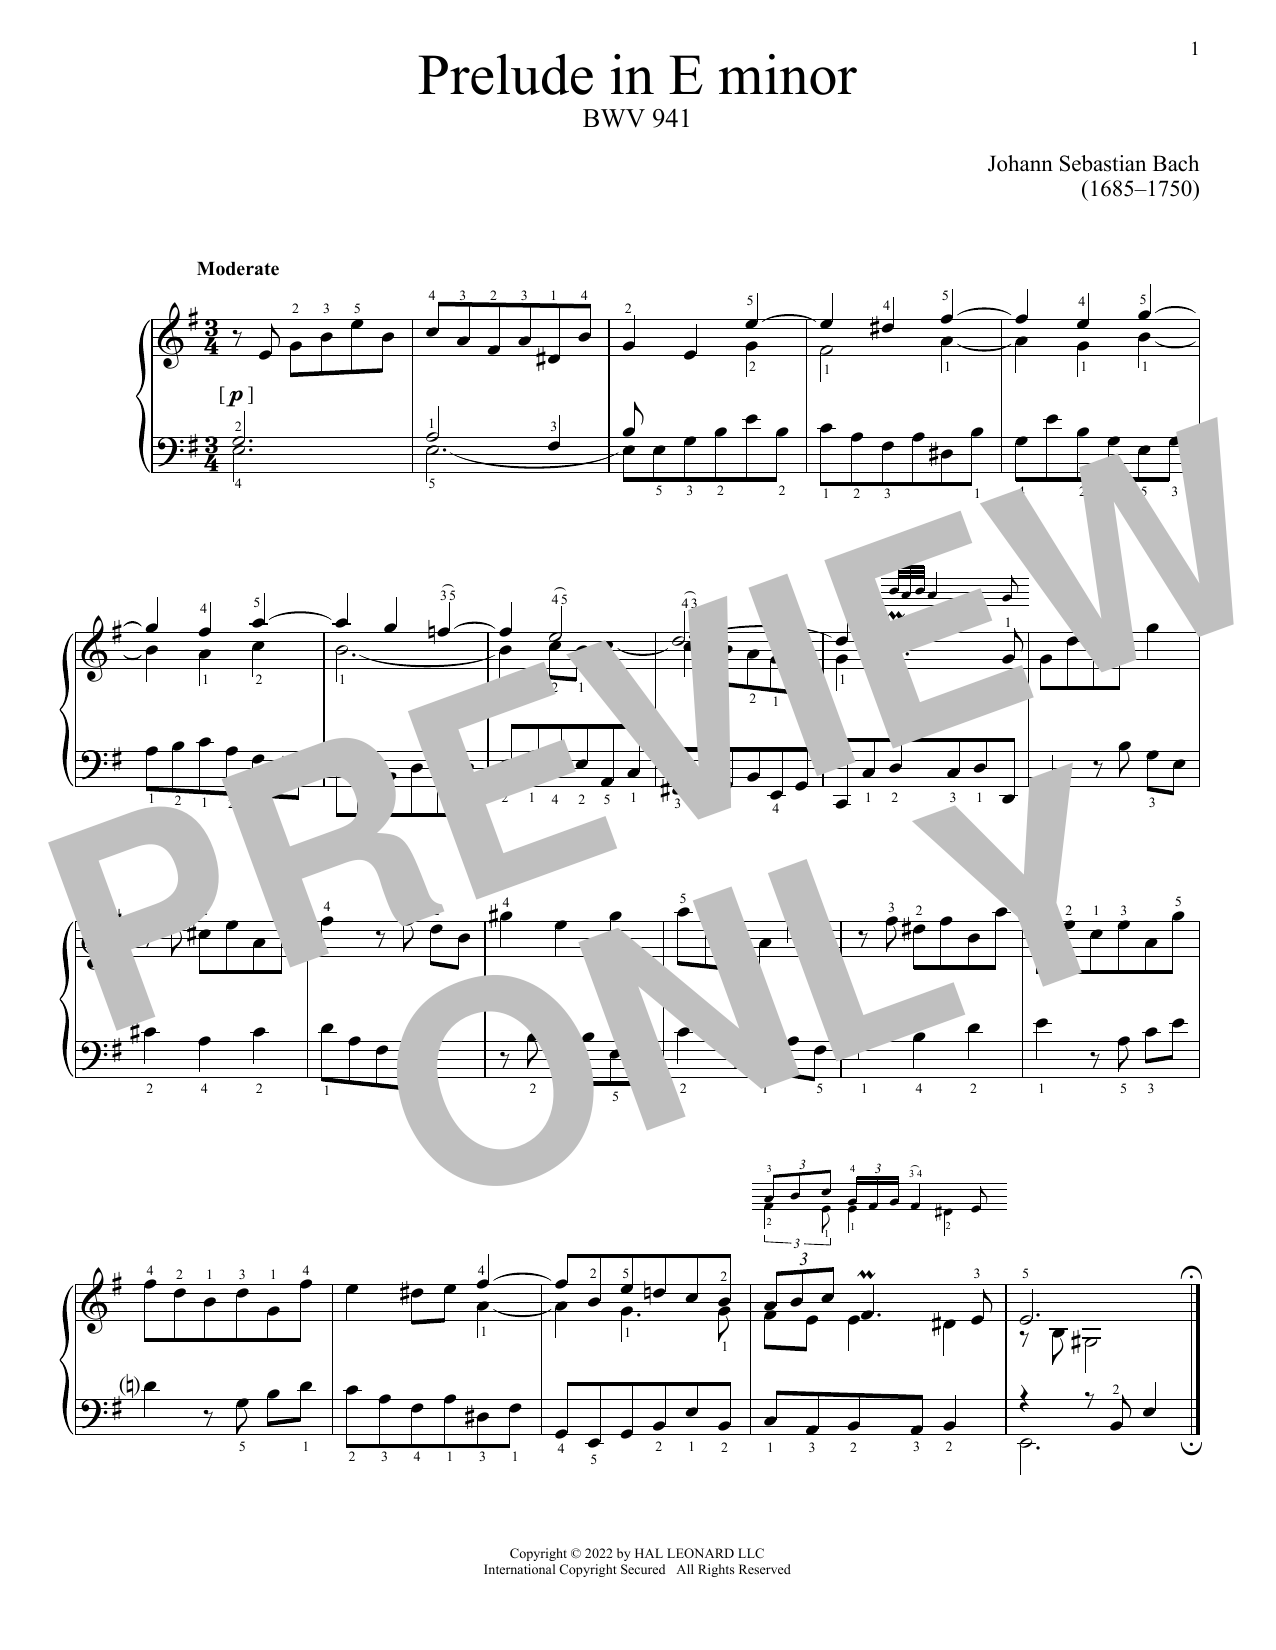 Johann Sebastian Bach Prelude In E Minor, BWV 941 Sheet Music Notes & Chords for Piano Solo - Download or Print PDF